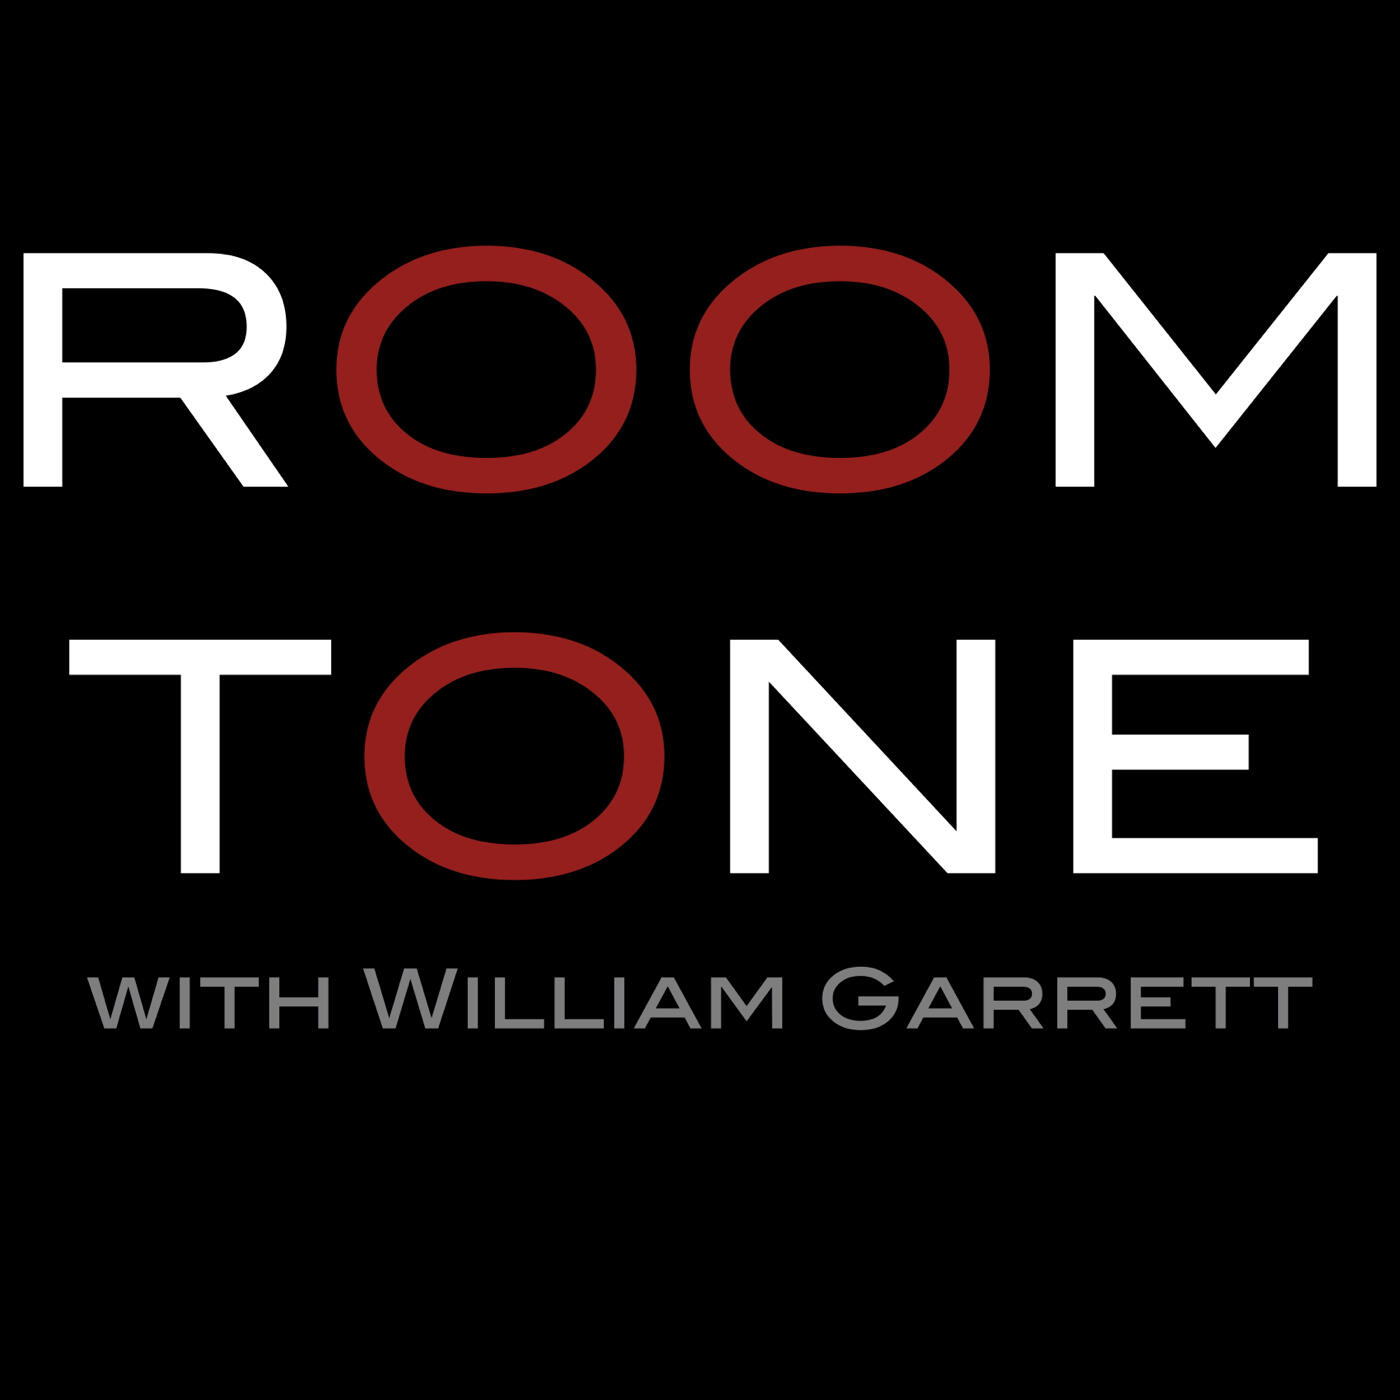 Room tone